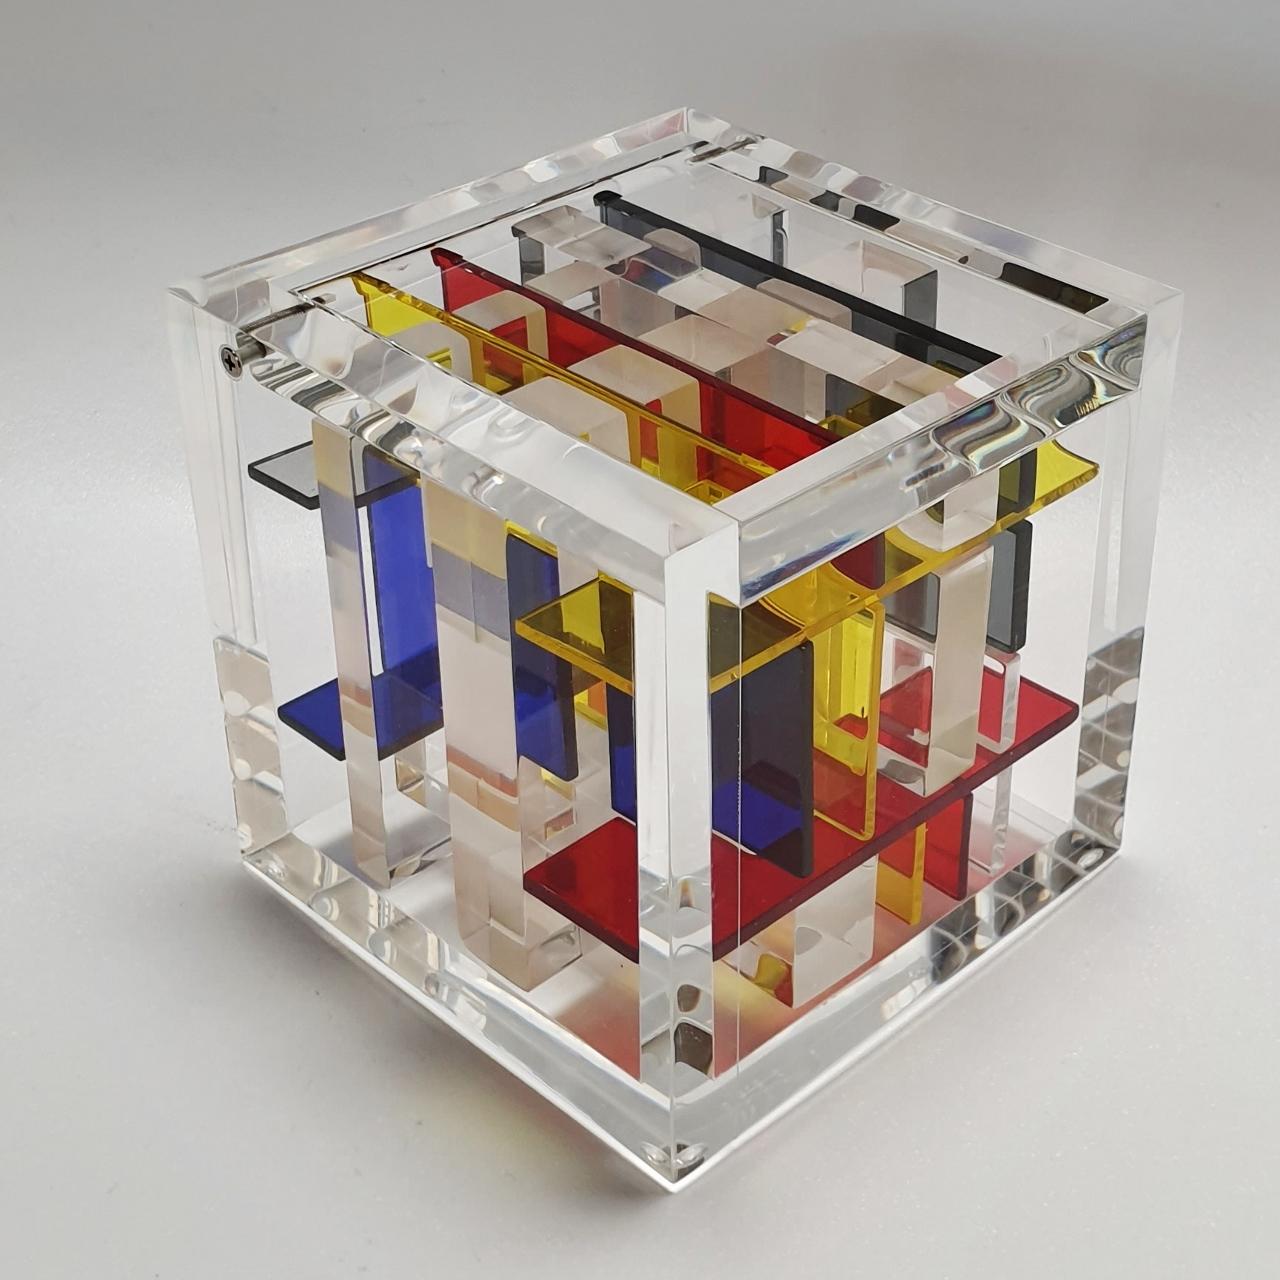 New York City - contemporary modern abstract geometric cube sculpture - Abstract Geometric Sculpture by Haringa + Olijve